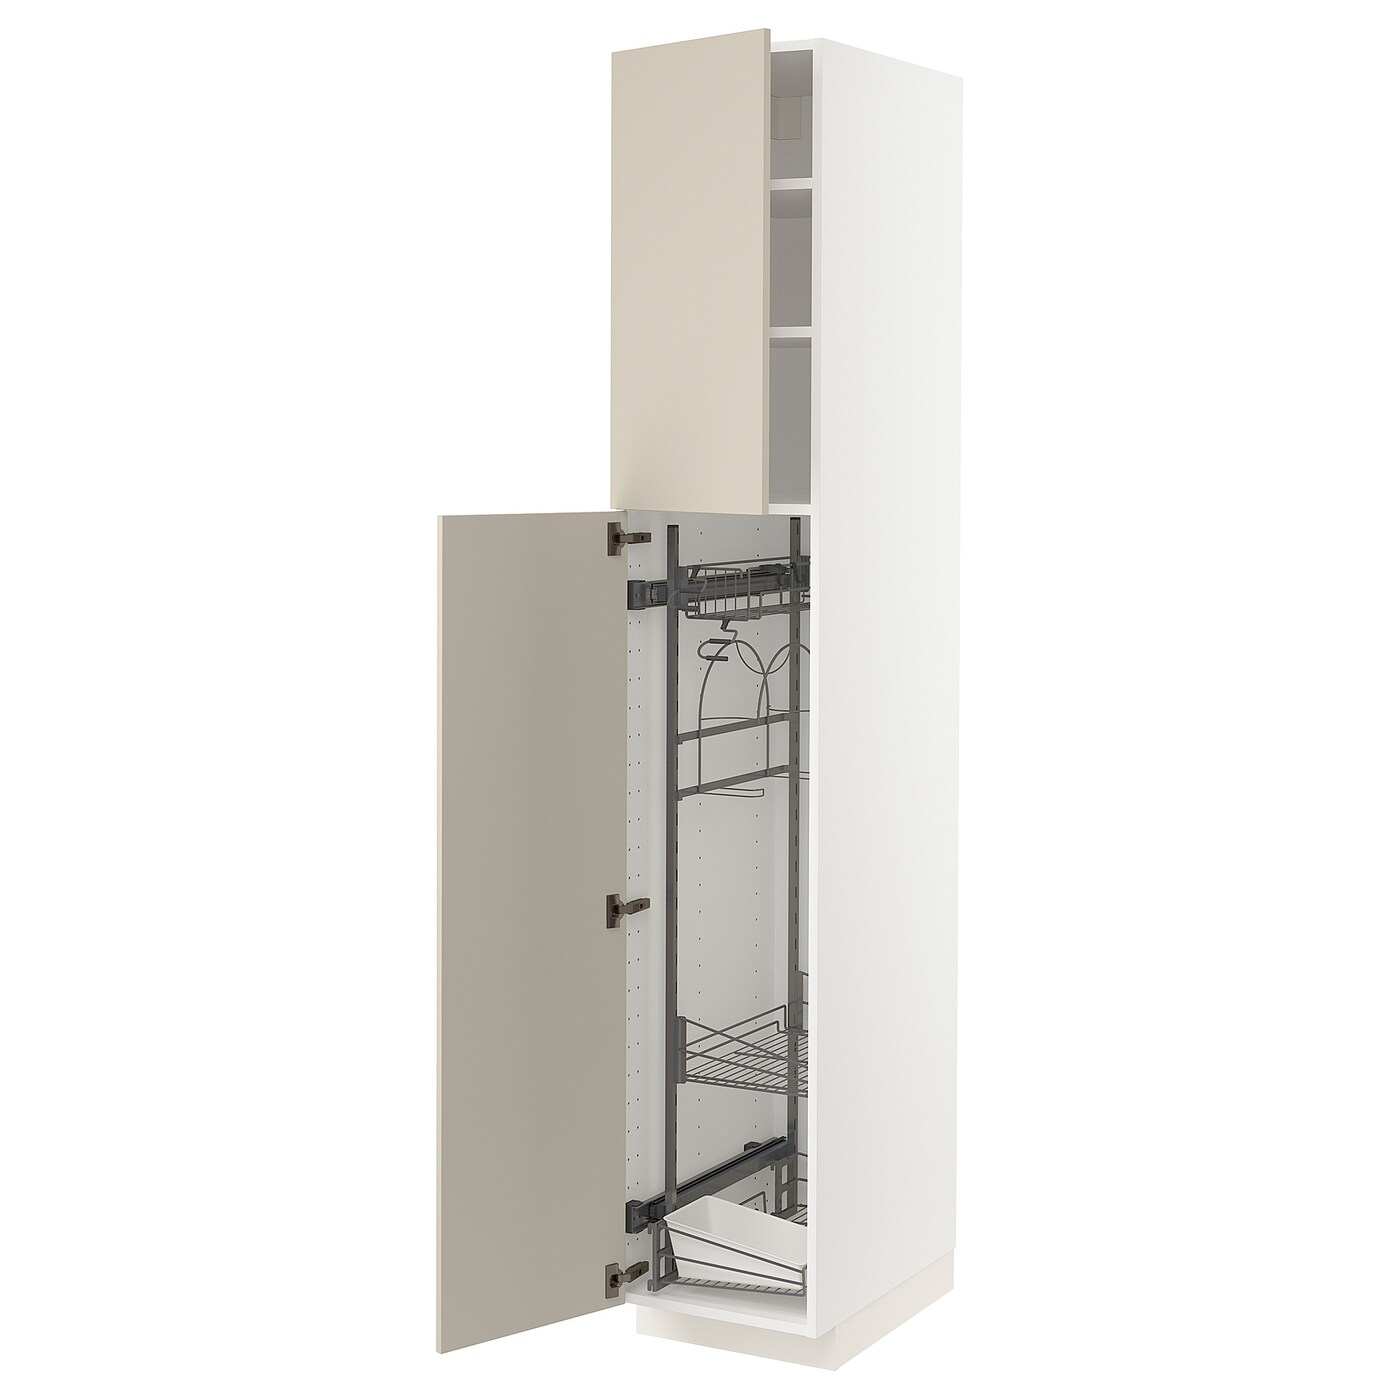 Высокий шкаф/бытовой - IKEA METOD/МЕТОД ИКЕА, 220х60х40 см, белый/бежевый